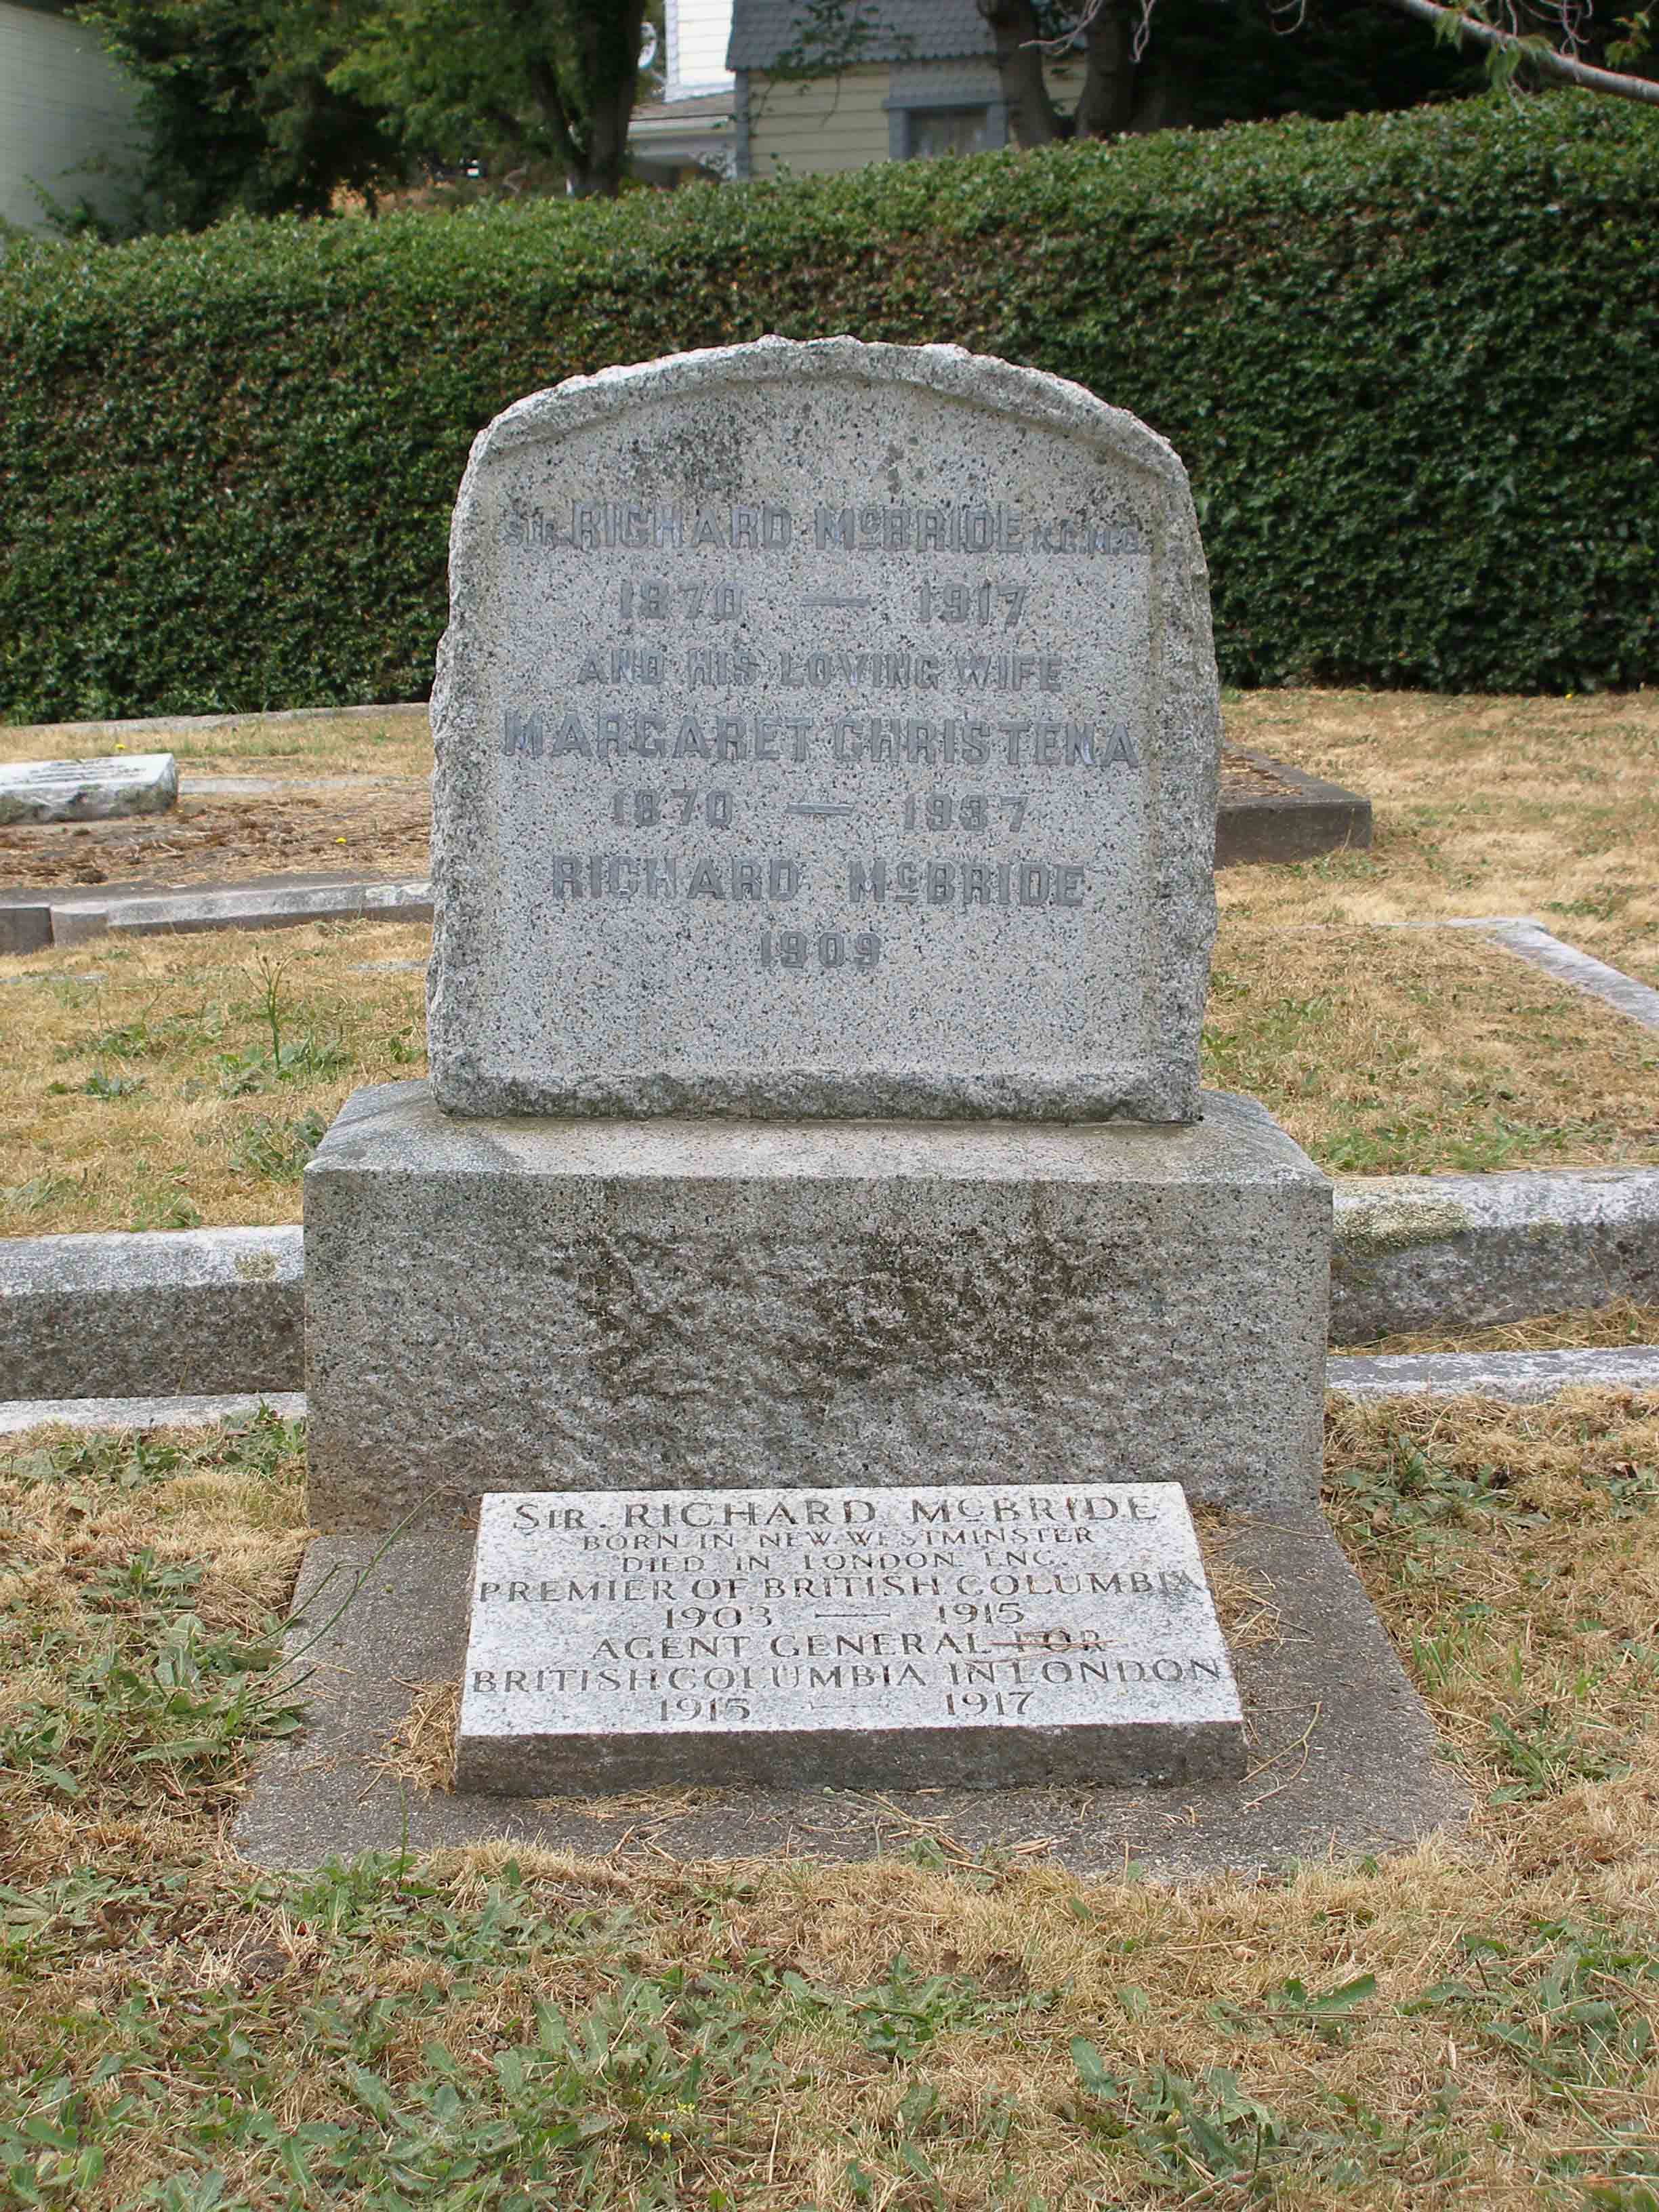 Sir Richard McBride headstone, Ross Bay Cemetery